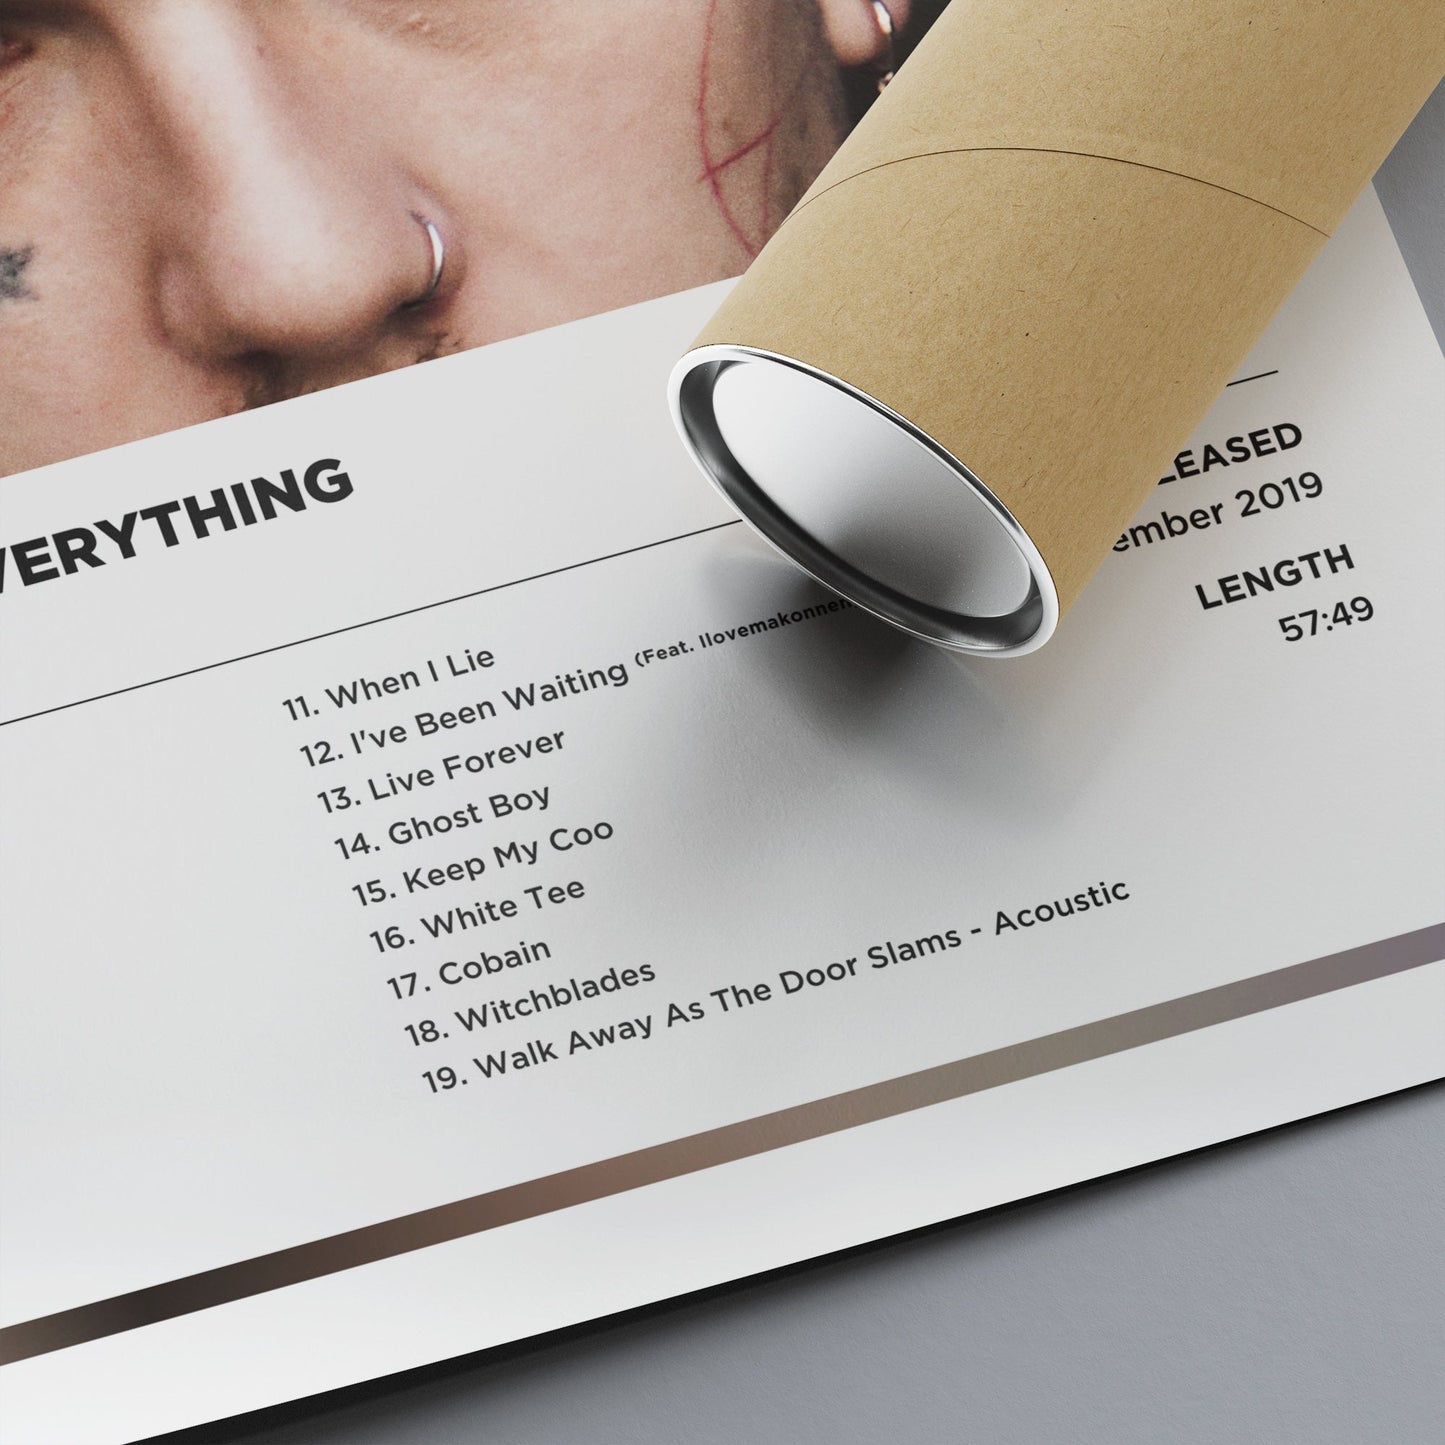 Lil Peep - Everybody's Everything Framed Poster Print | Polaroid Style | Album Cover Artwork